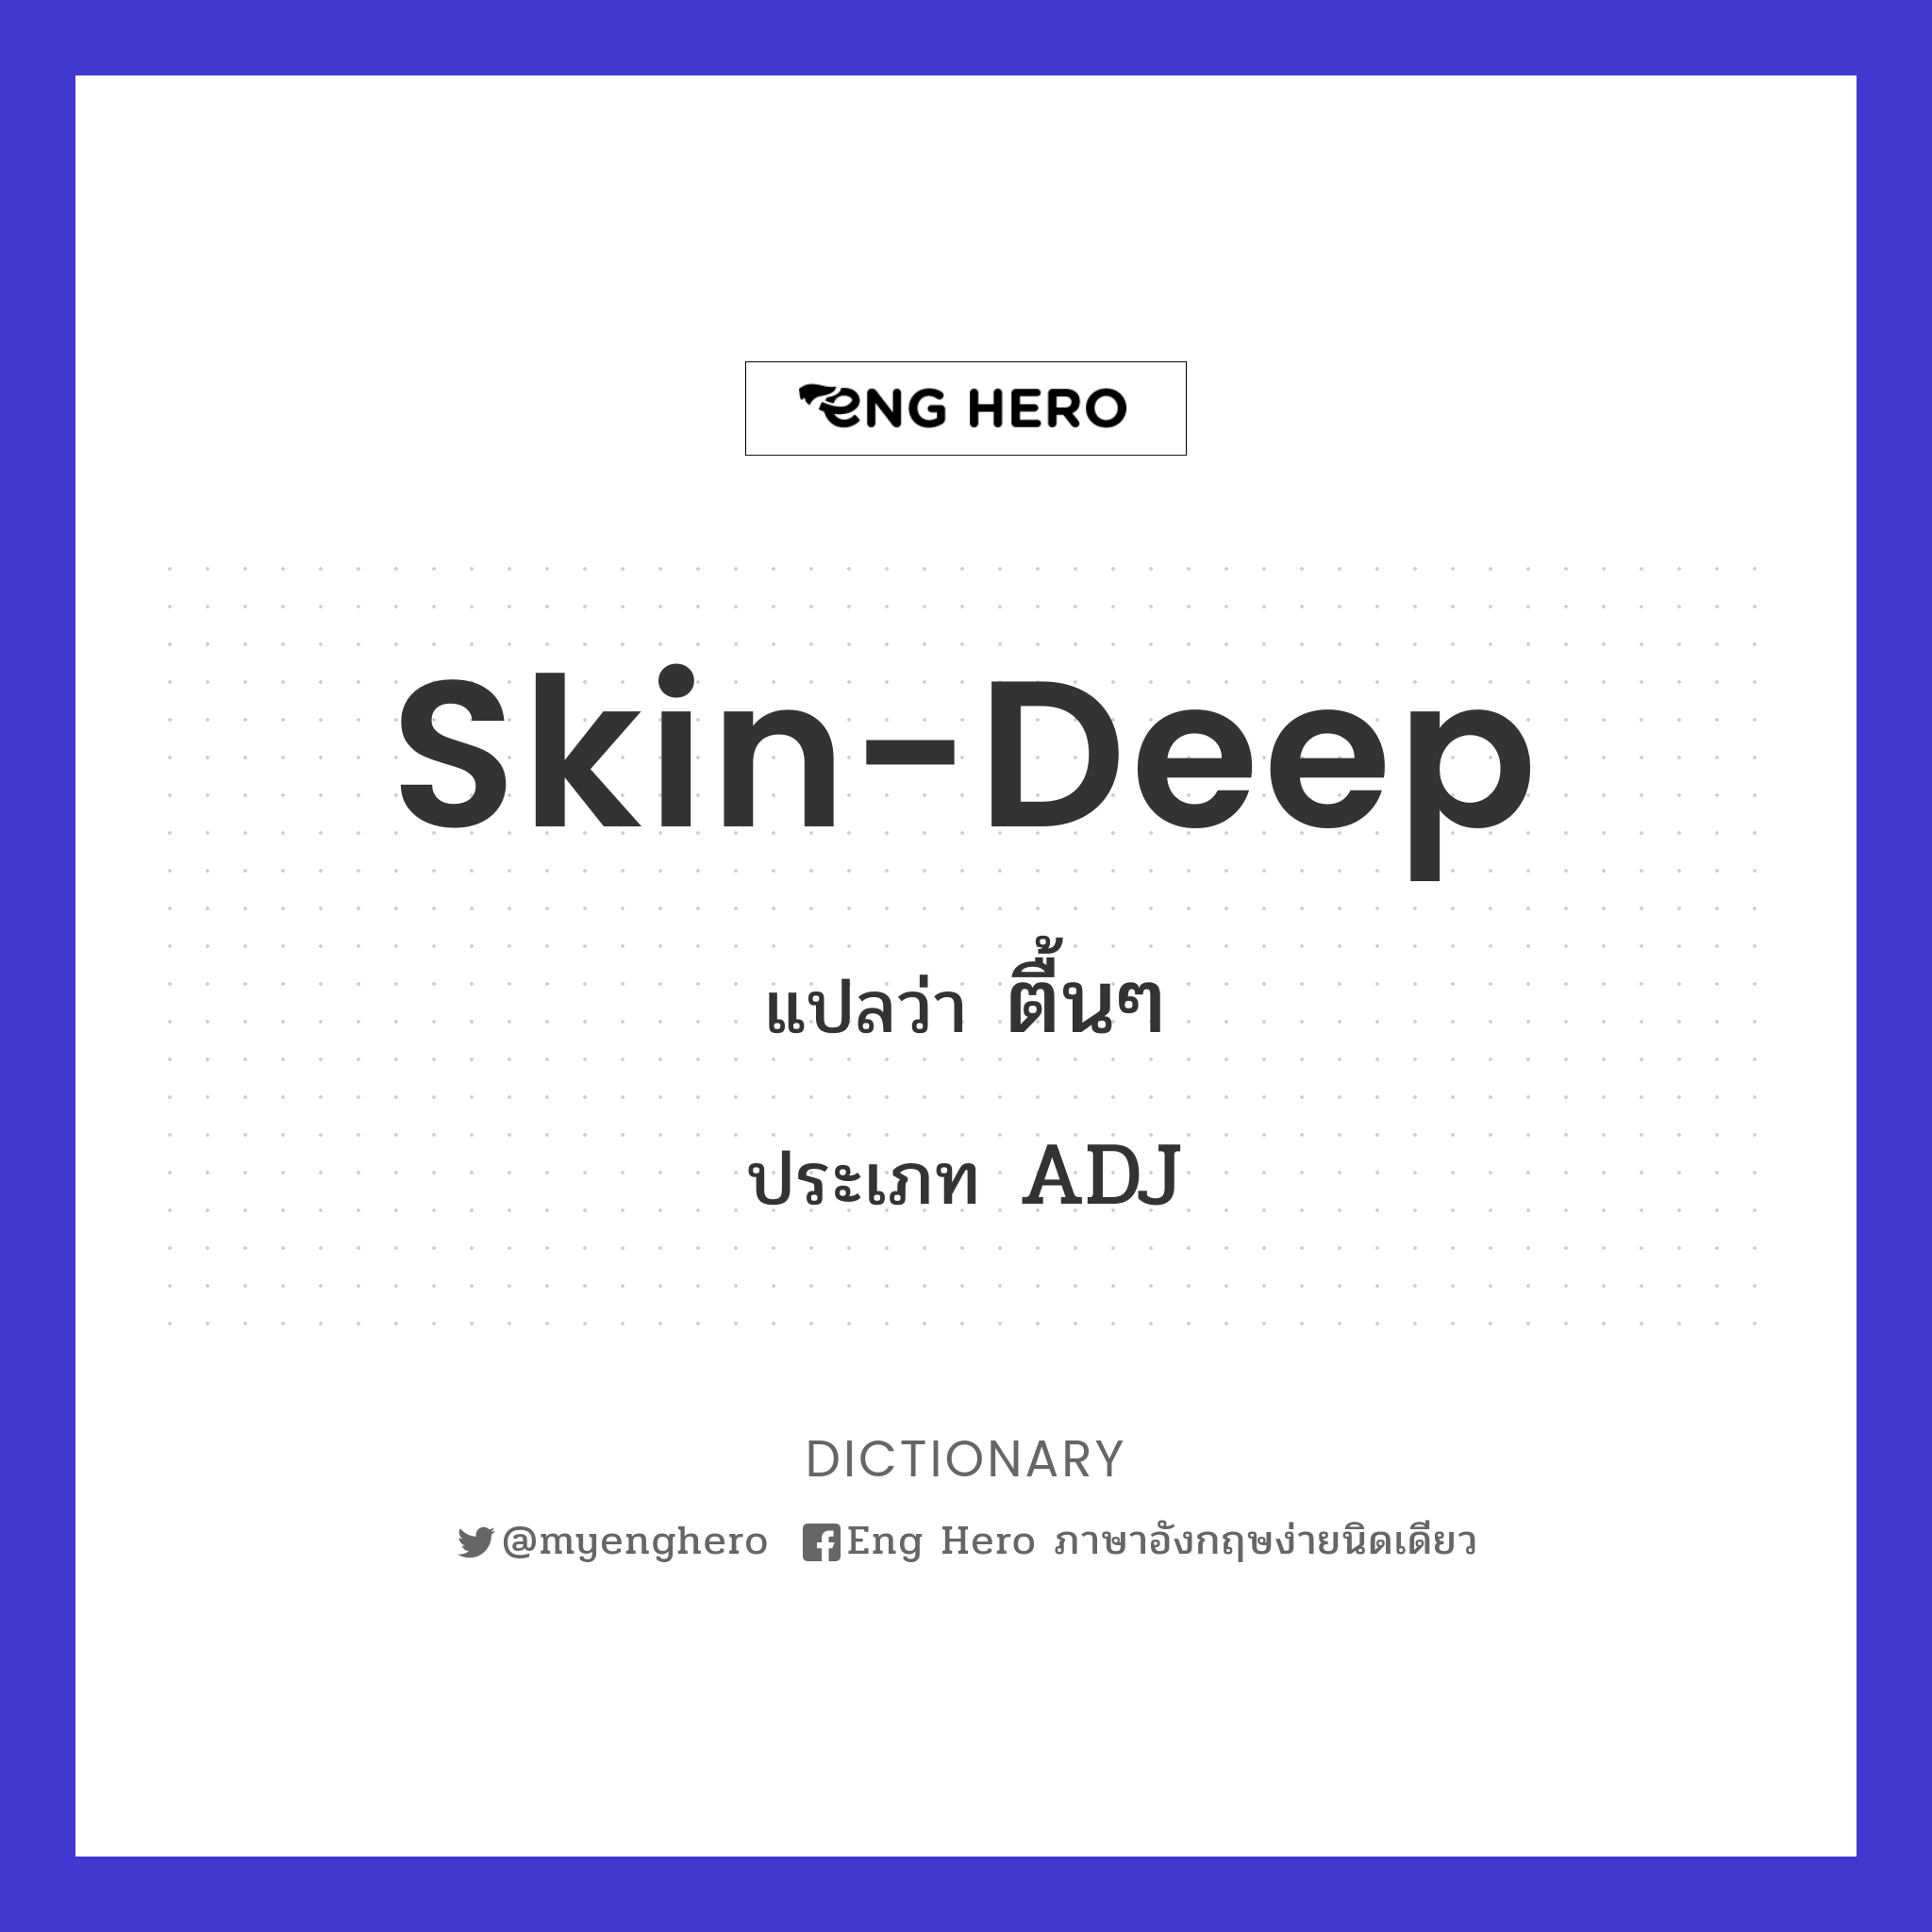 skin-deep